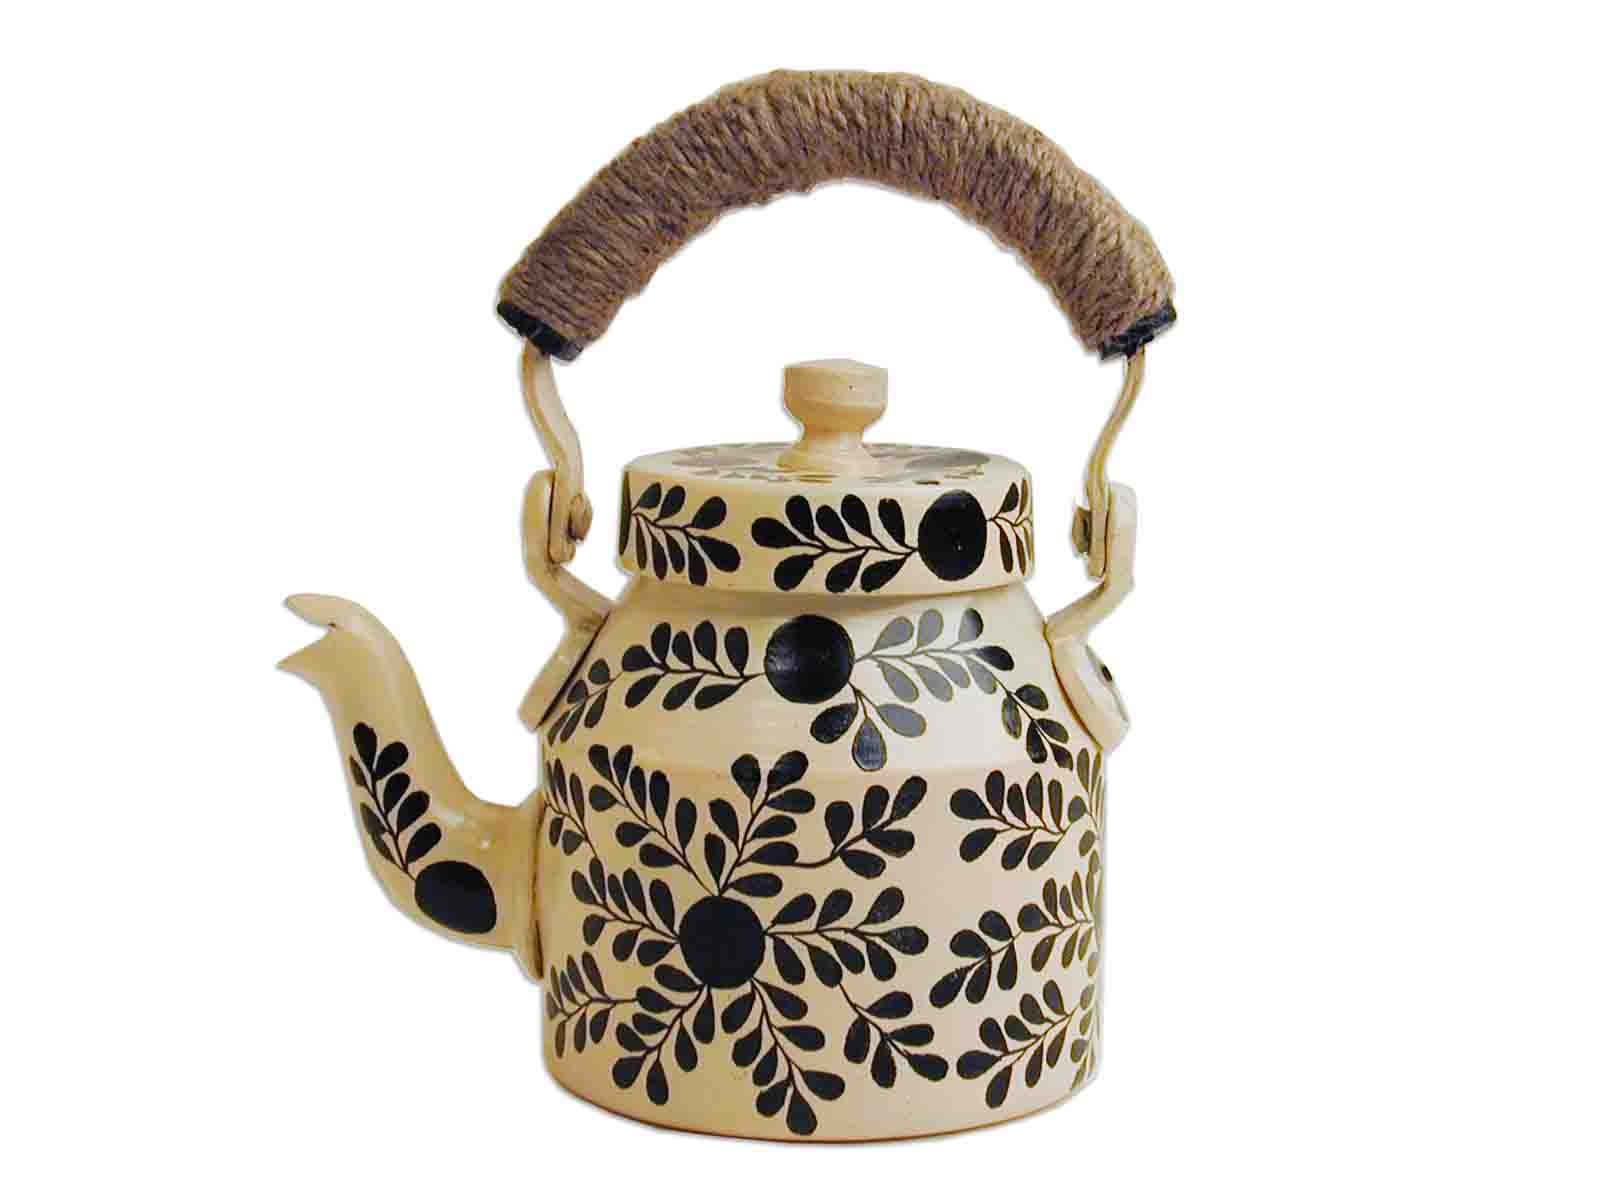 https://taooftea.com/wp-content/uploads/2021/01/Painted-Teapot-BlackLeaf-Sl-1.jpg